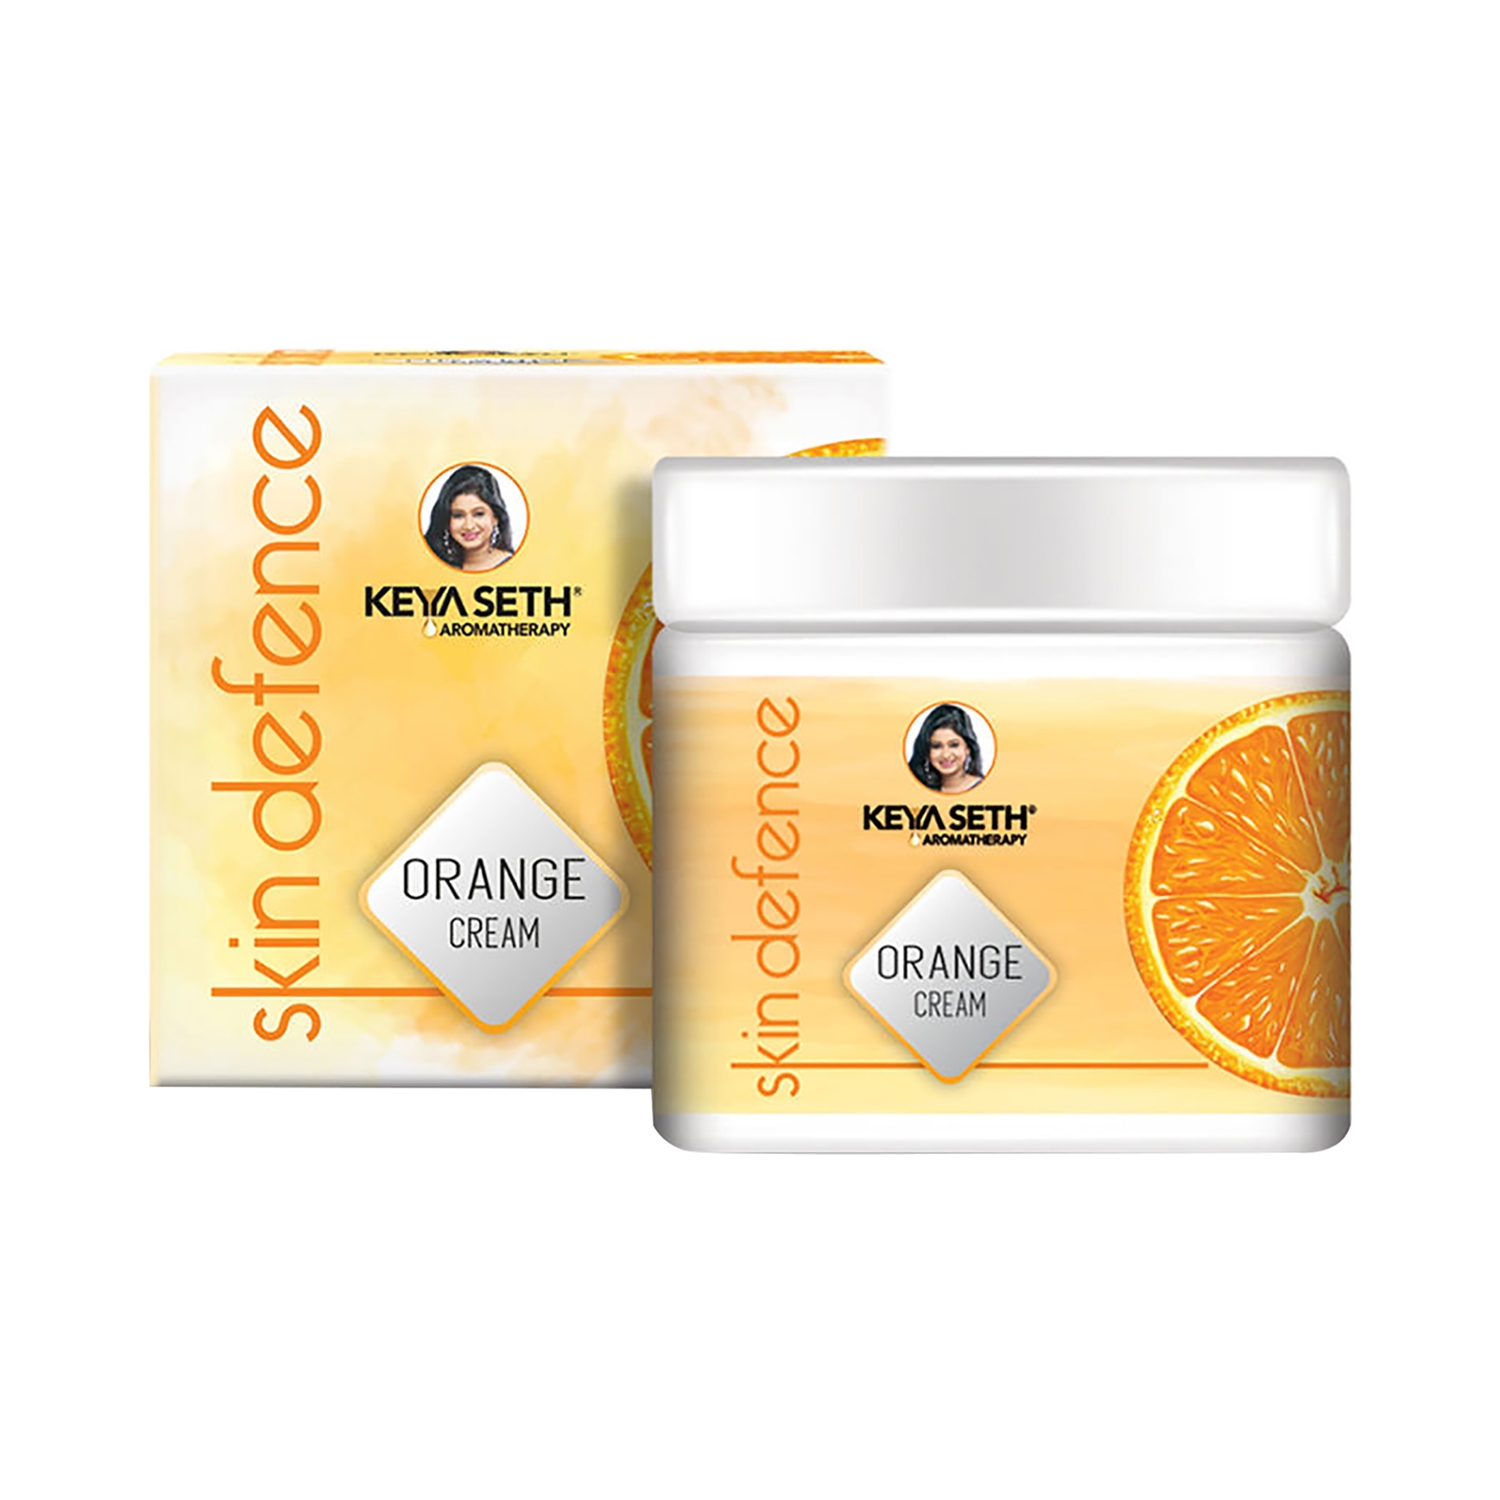 Keya Seth Aromatherapy | Keya Seth Aromatherapy Skin Defence Orange Moisturizer Cream (50g)